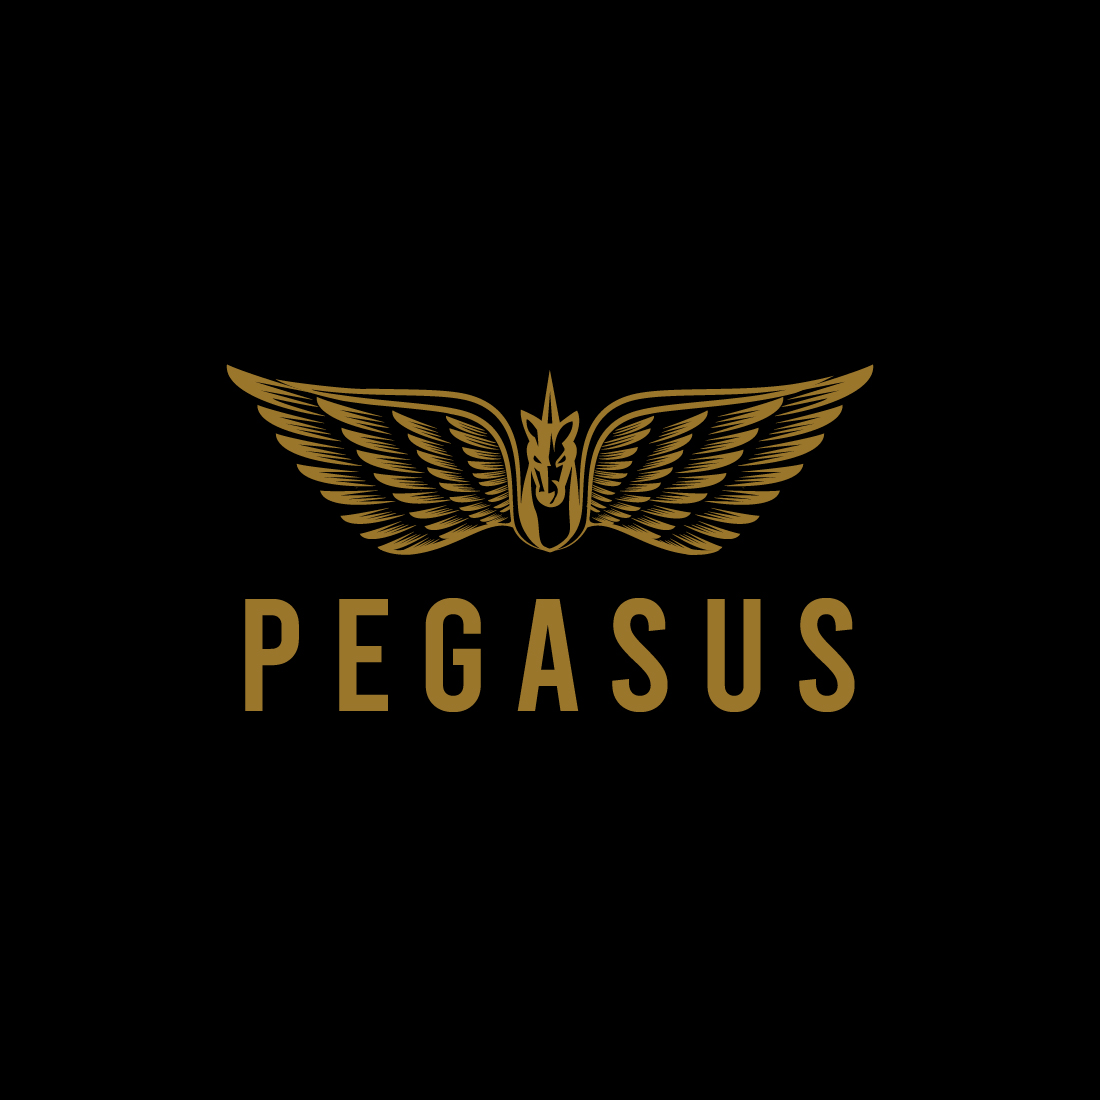 Pegasus Logos cover image.